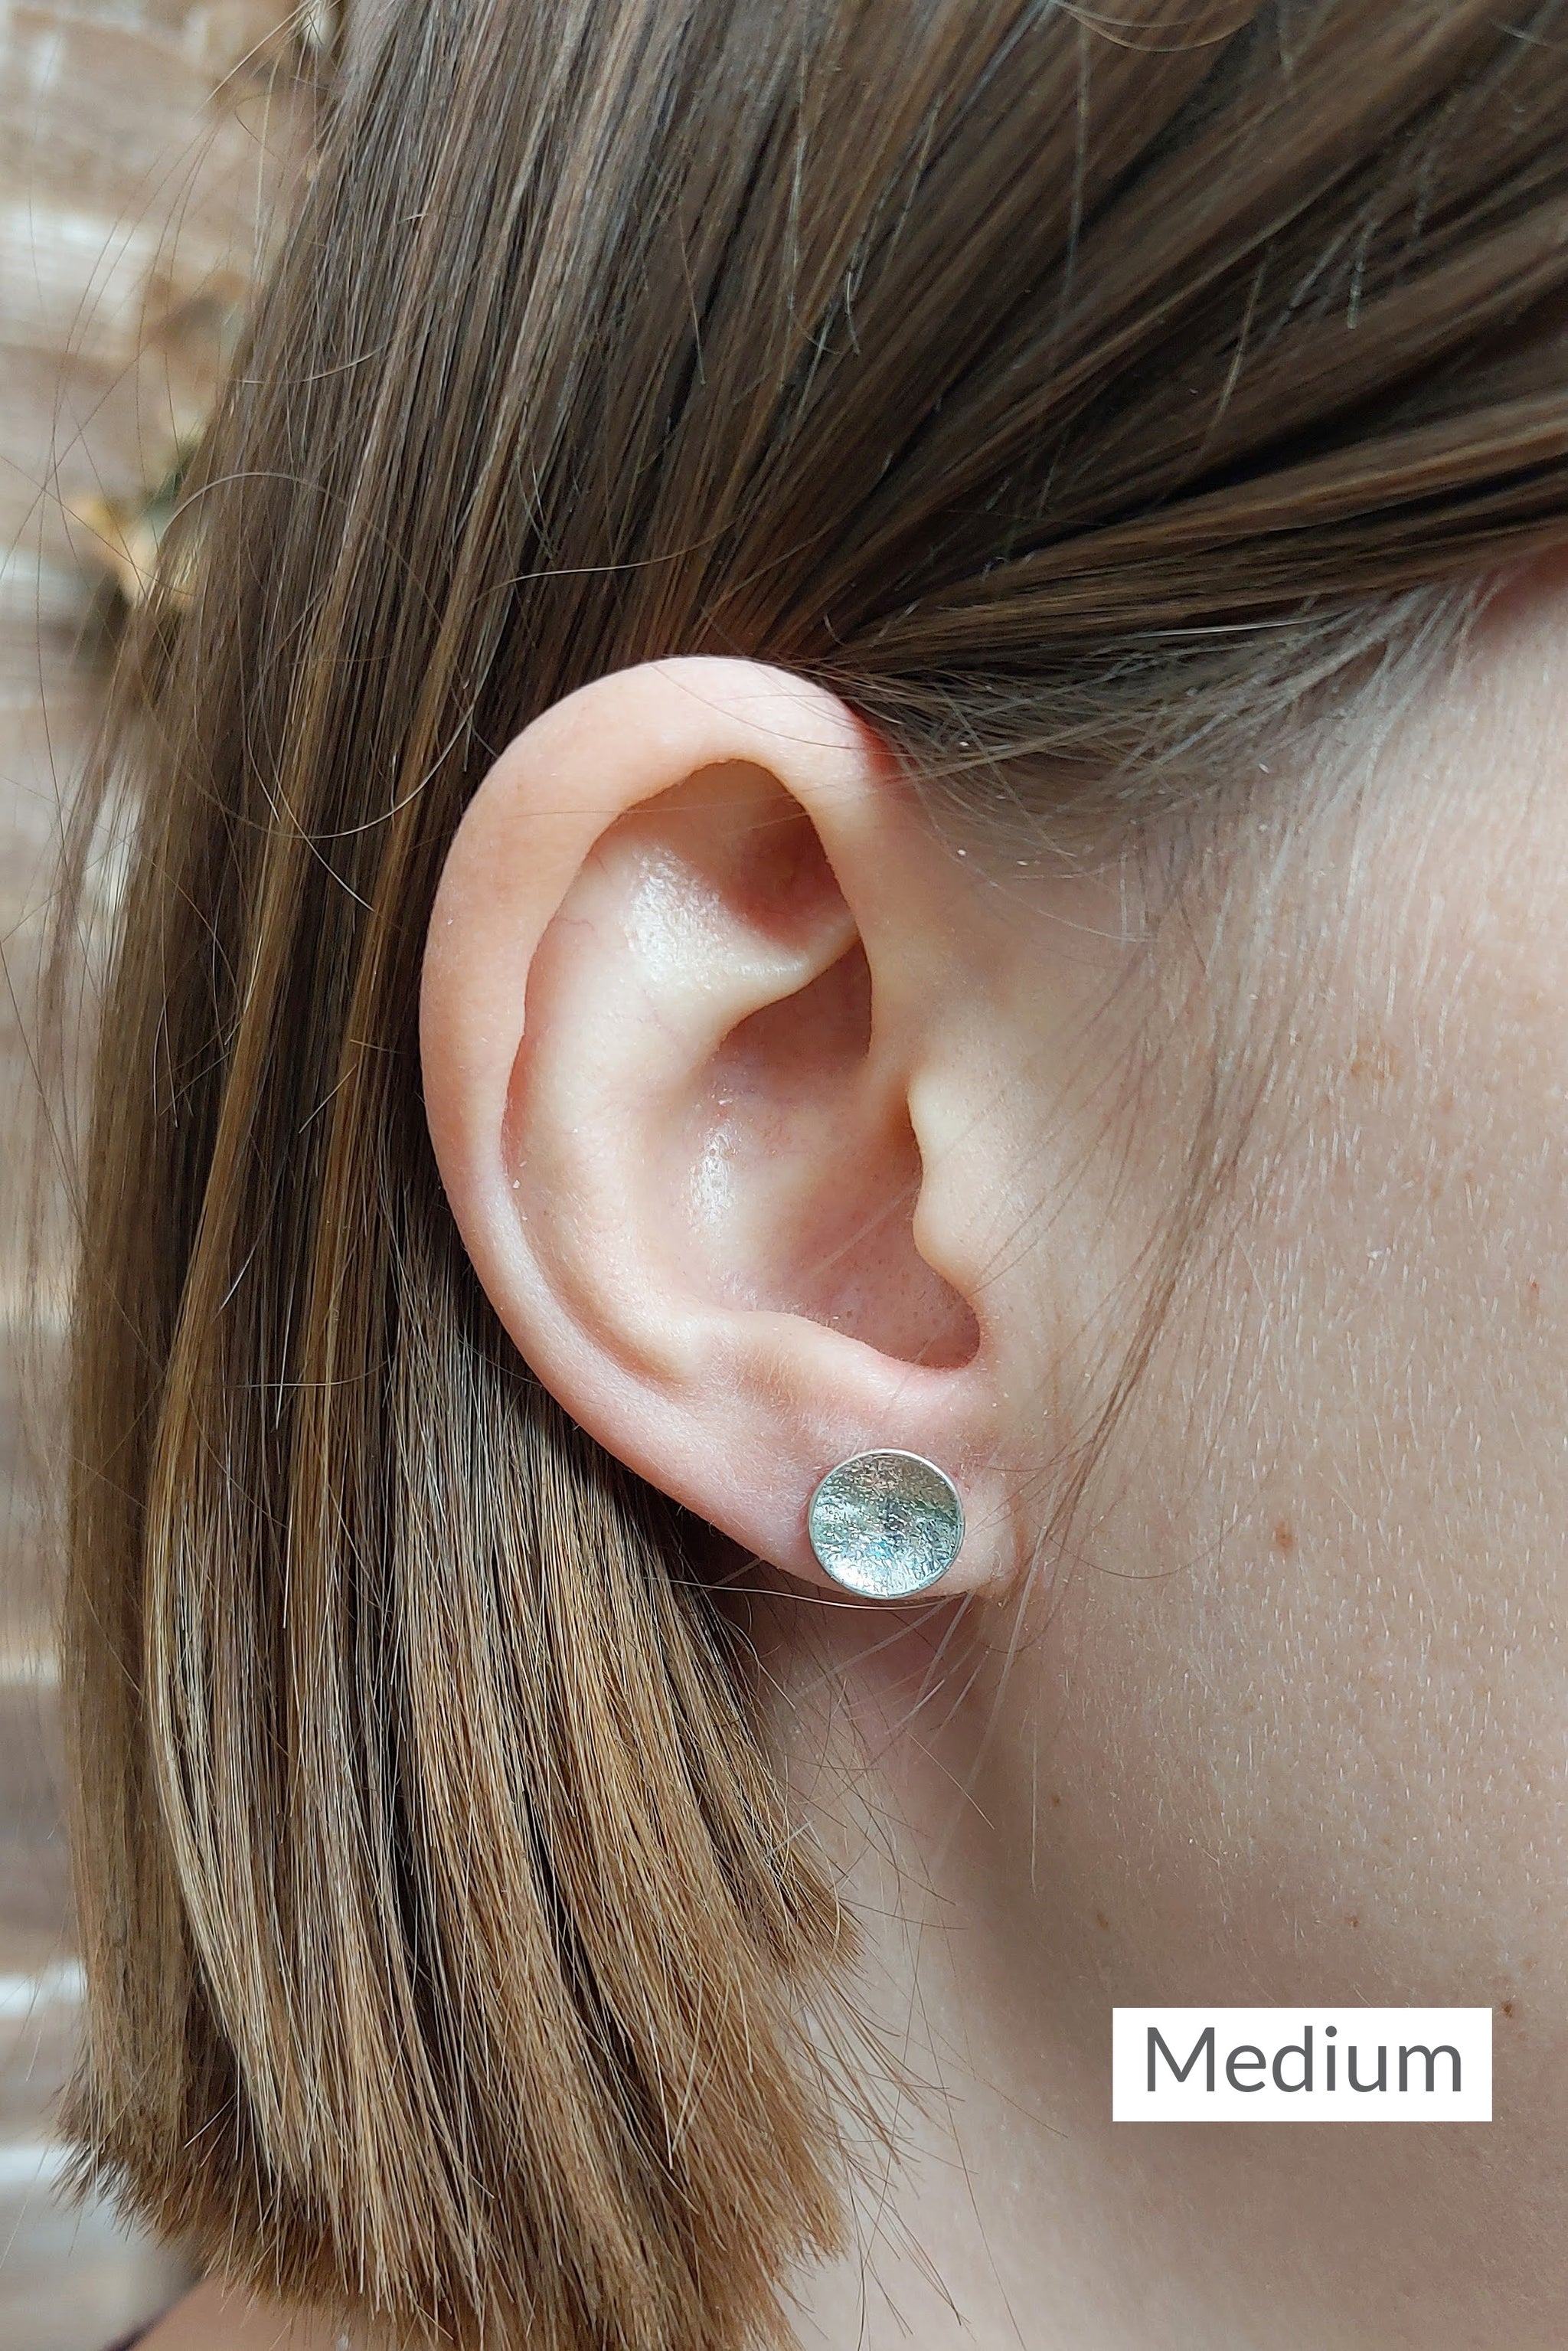 sea inspired stud earrings handmade in 100% recycled silver by Gemma Tremayne Jewellery